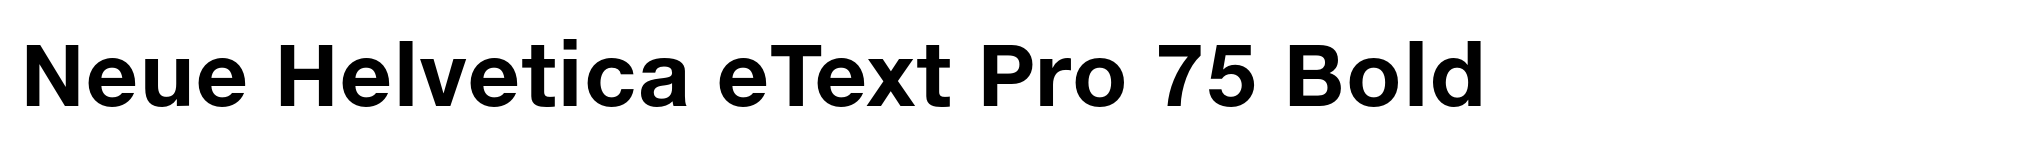 Neue Helvetica eText Pro 75 Bold image